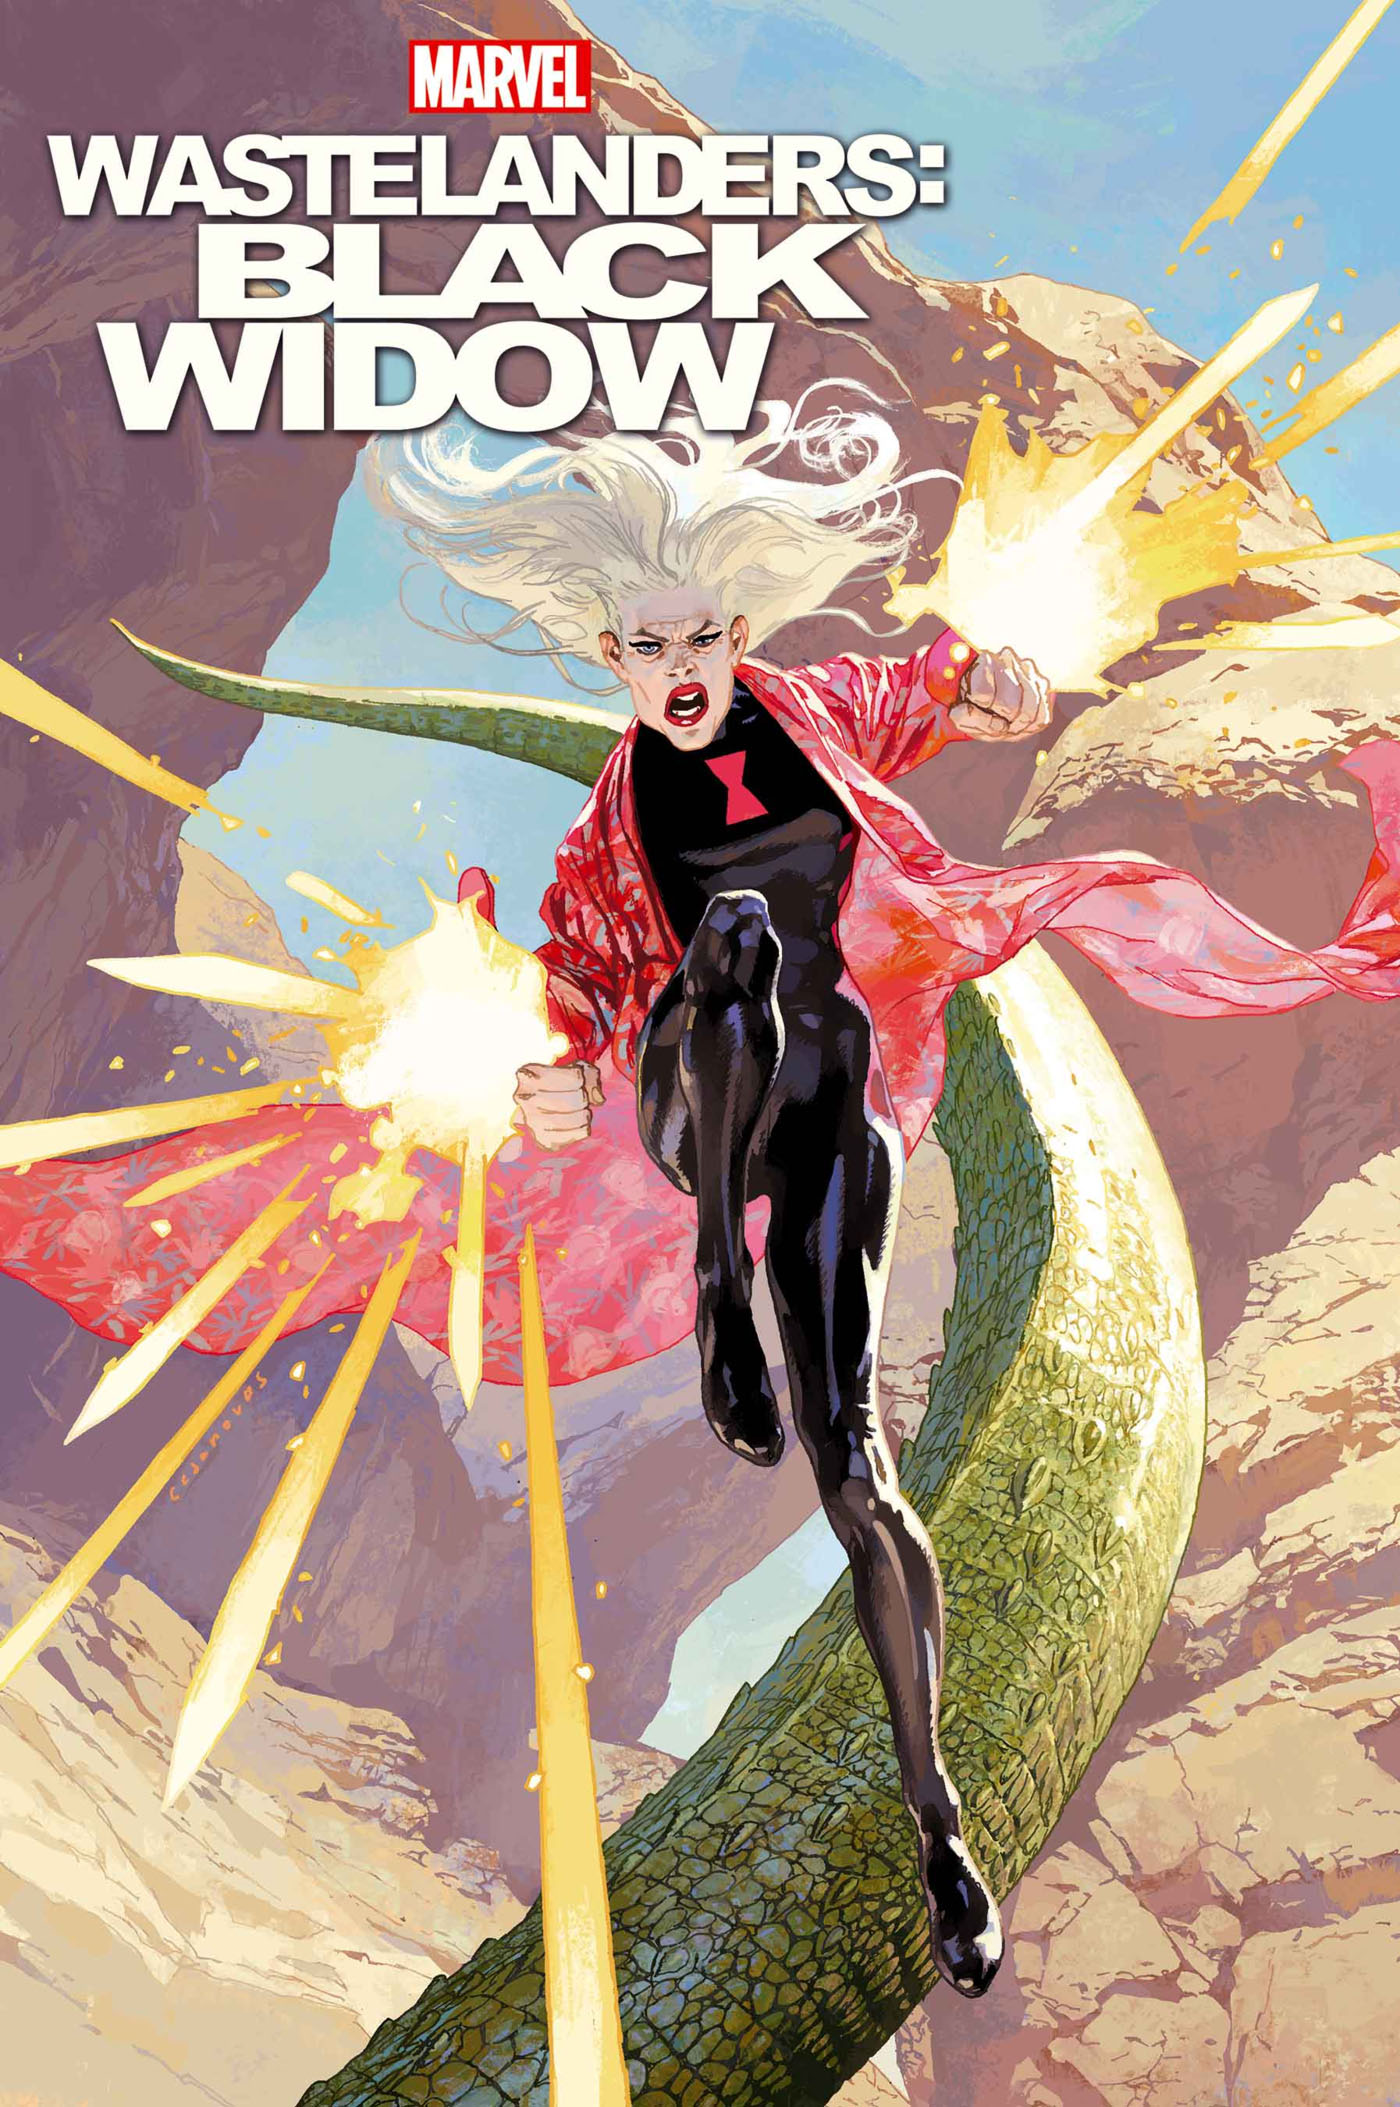 Wastelanders: Black Widow #1 kapağı